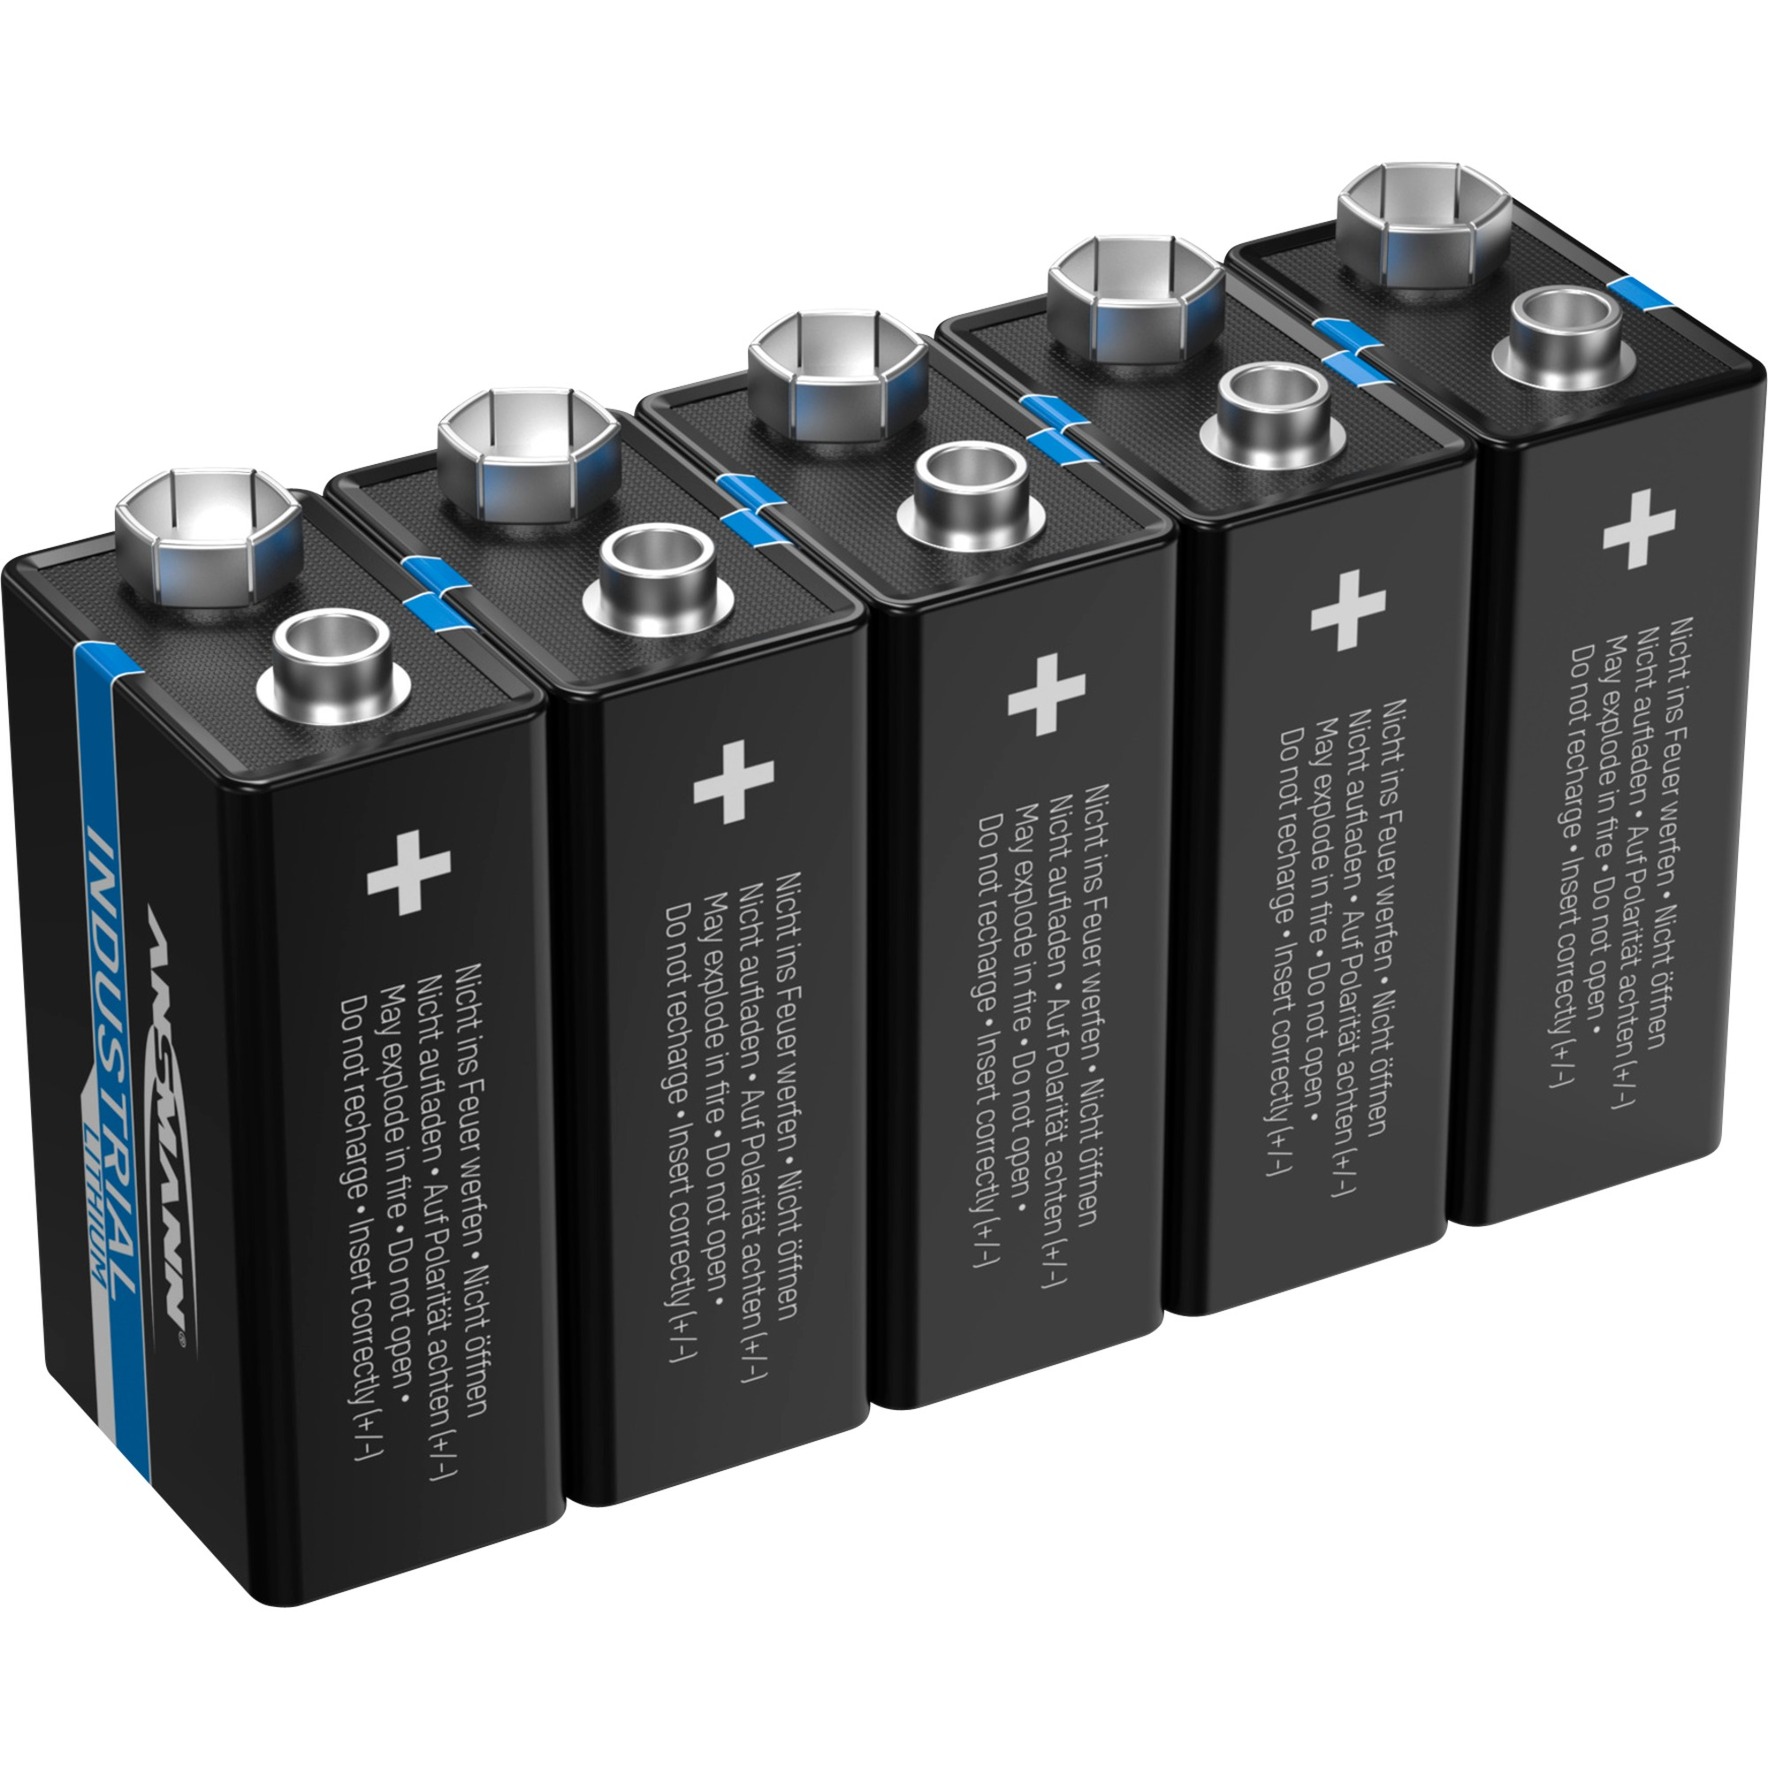 Lithium Batterie Block E / 1604LC von Ansmann